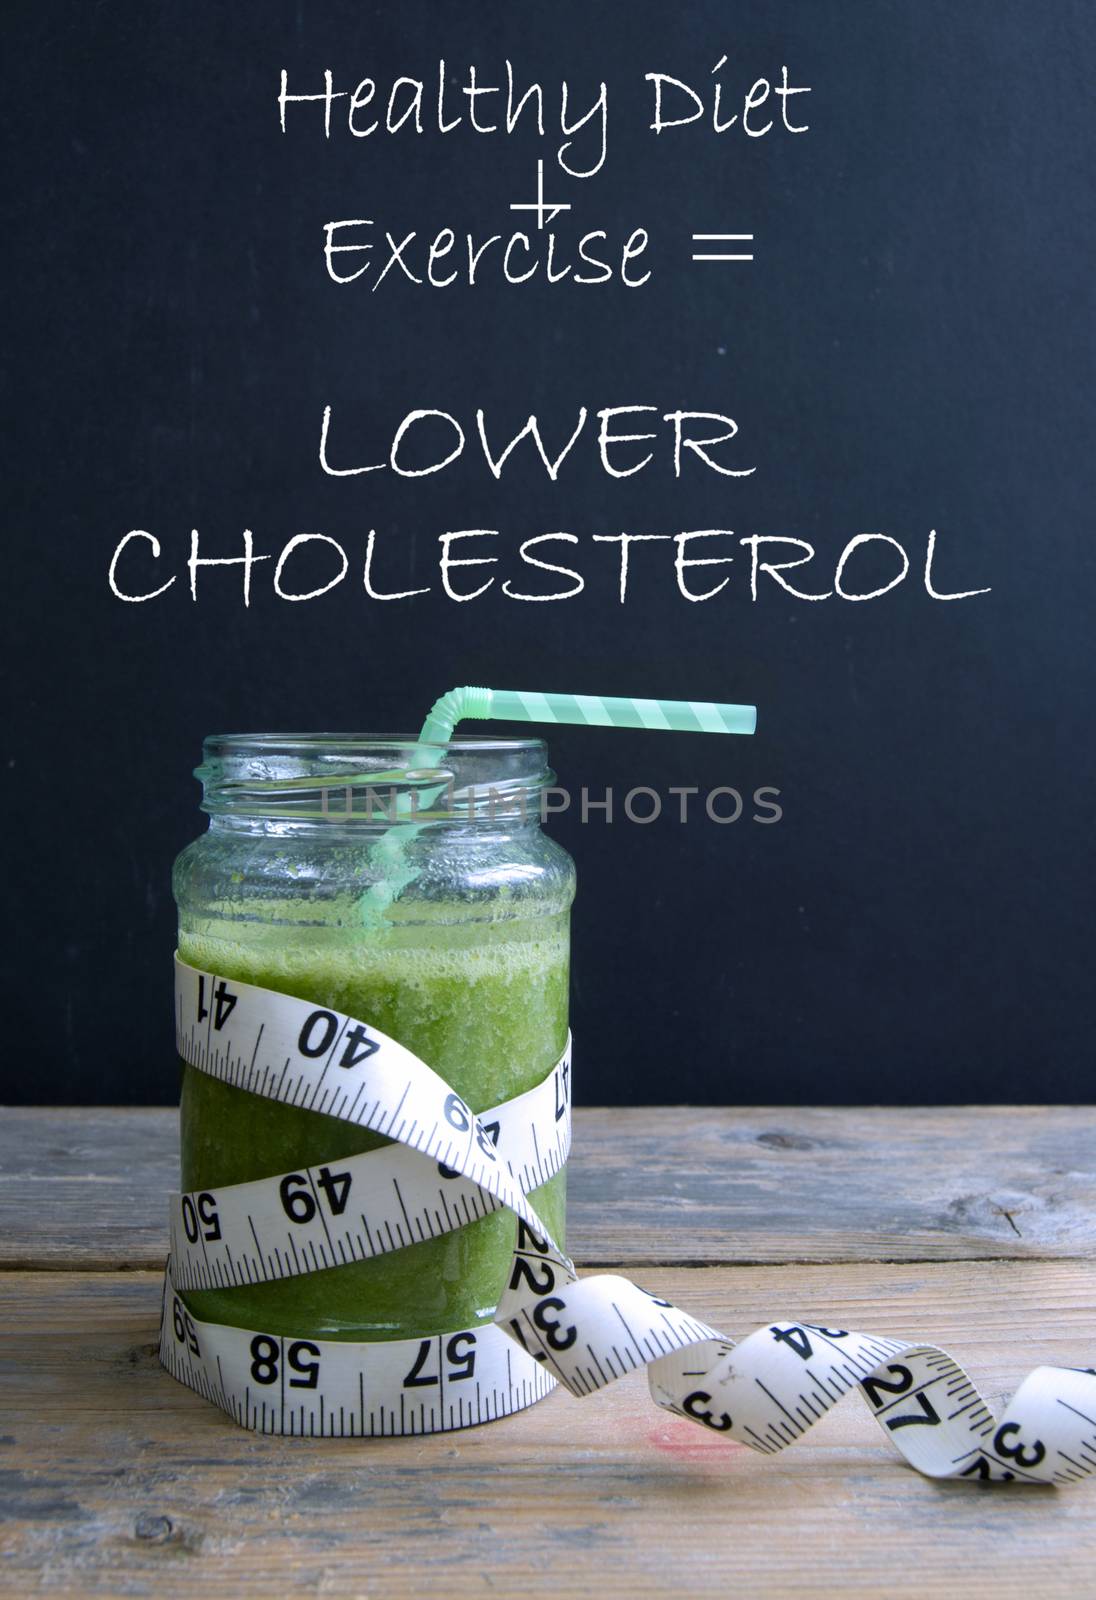 Lower cholesterol solution by unikpix